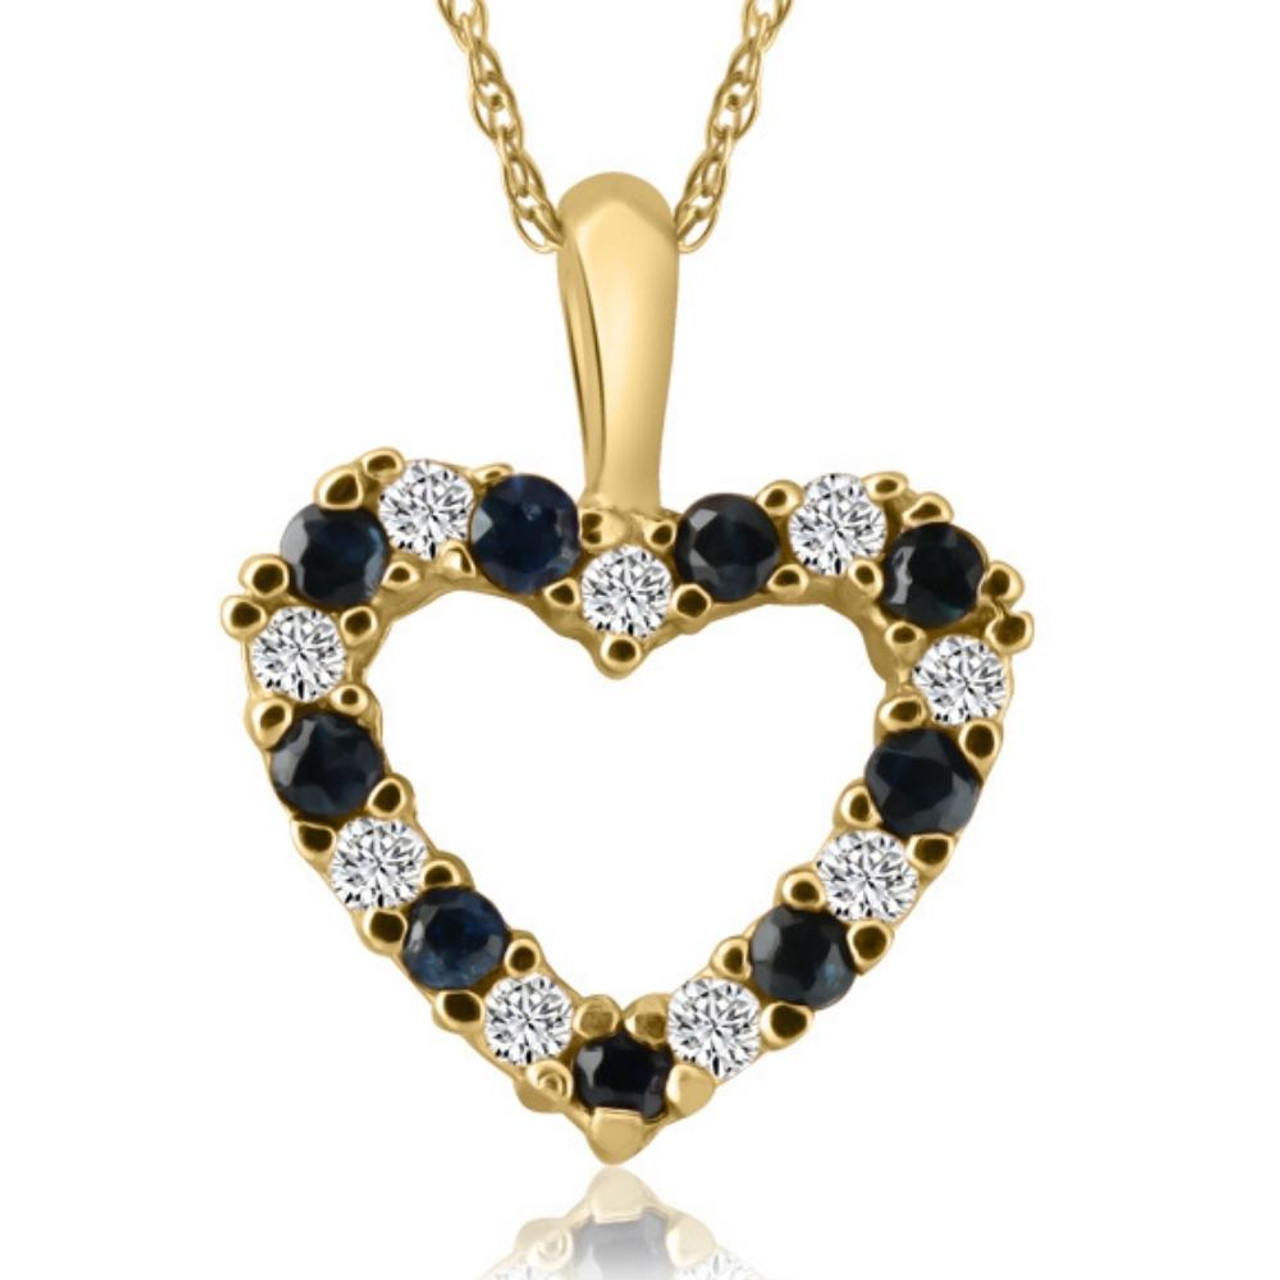 Diamond Heart Pendant Toggle Clasp Necklace - 14K Yellow Gold